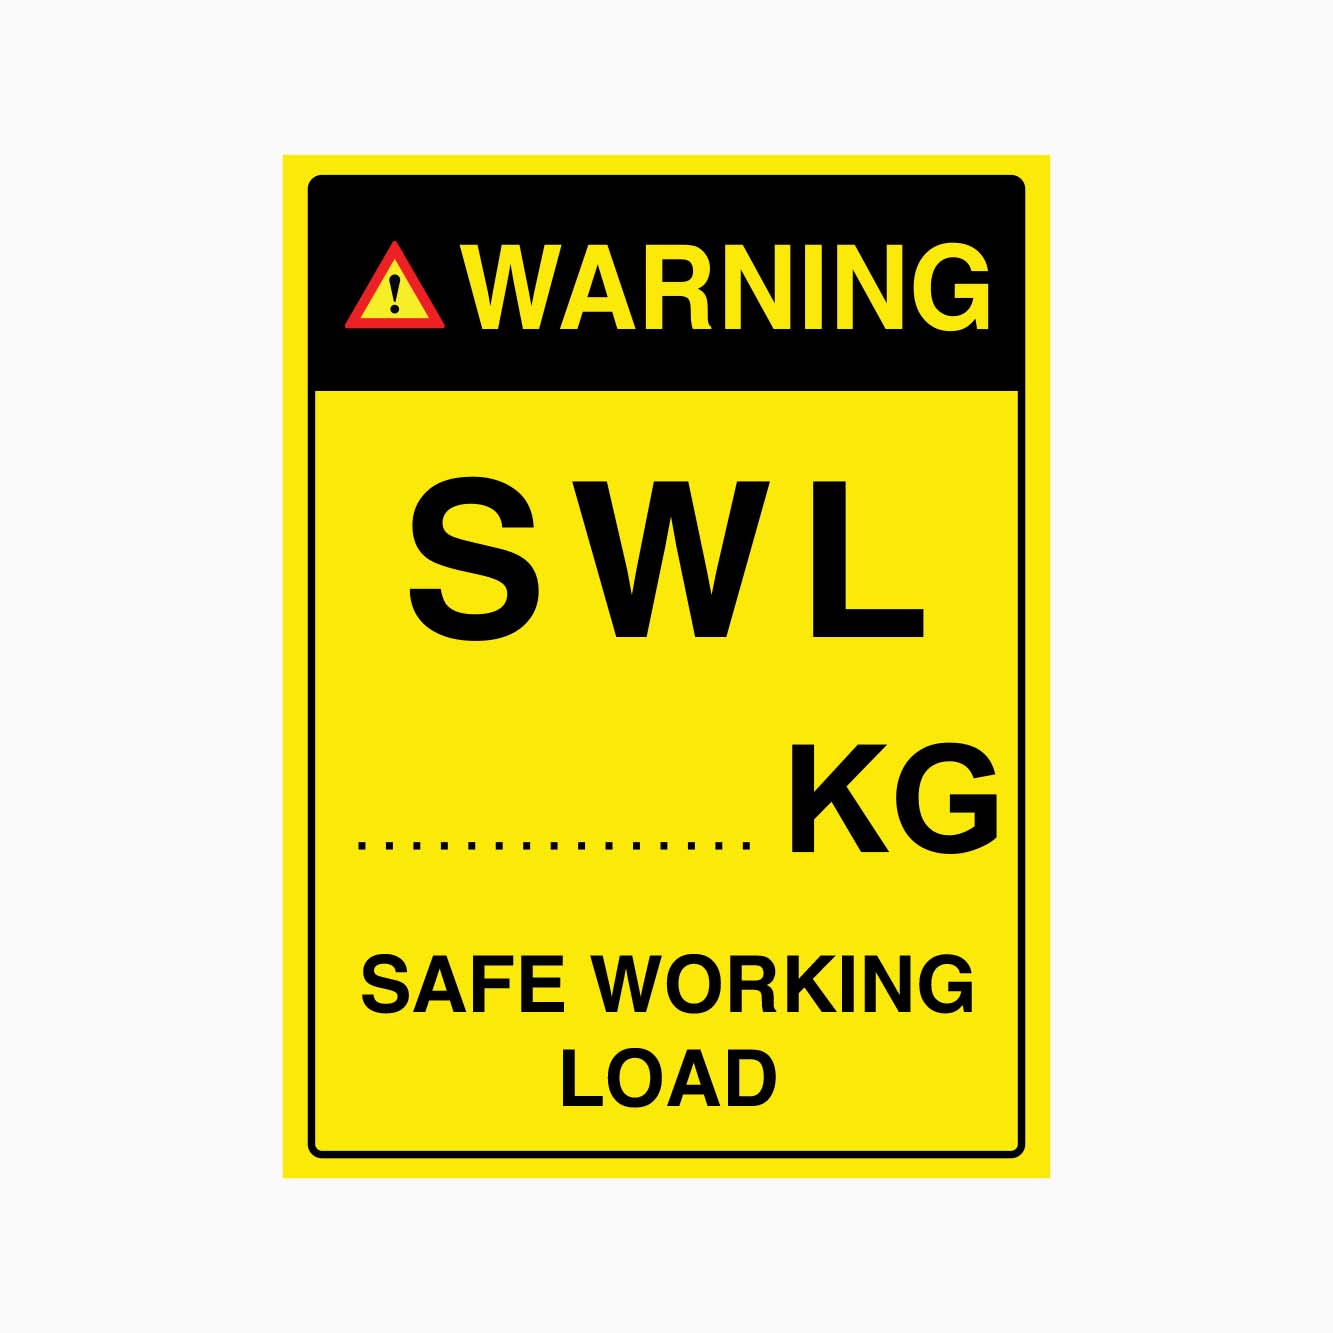 WARNING SWL .... KG SAFE WORKING LOAD SIGN - VEHICLE SAFETY SIGNS - GET SIGNS